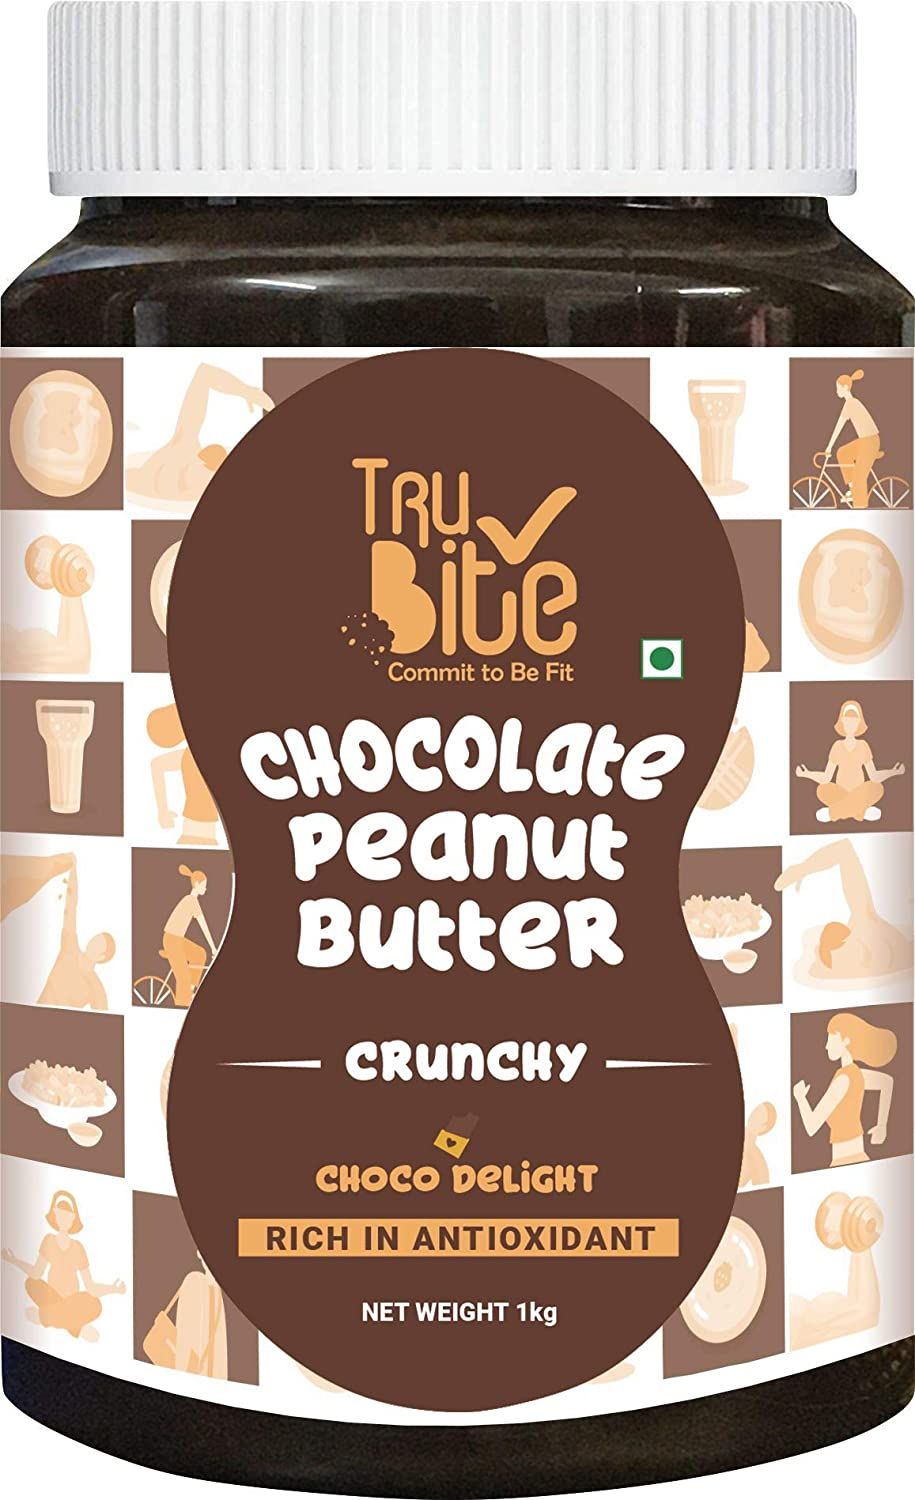 Trubite Chocolate Peanut Butter Crunchy Image